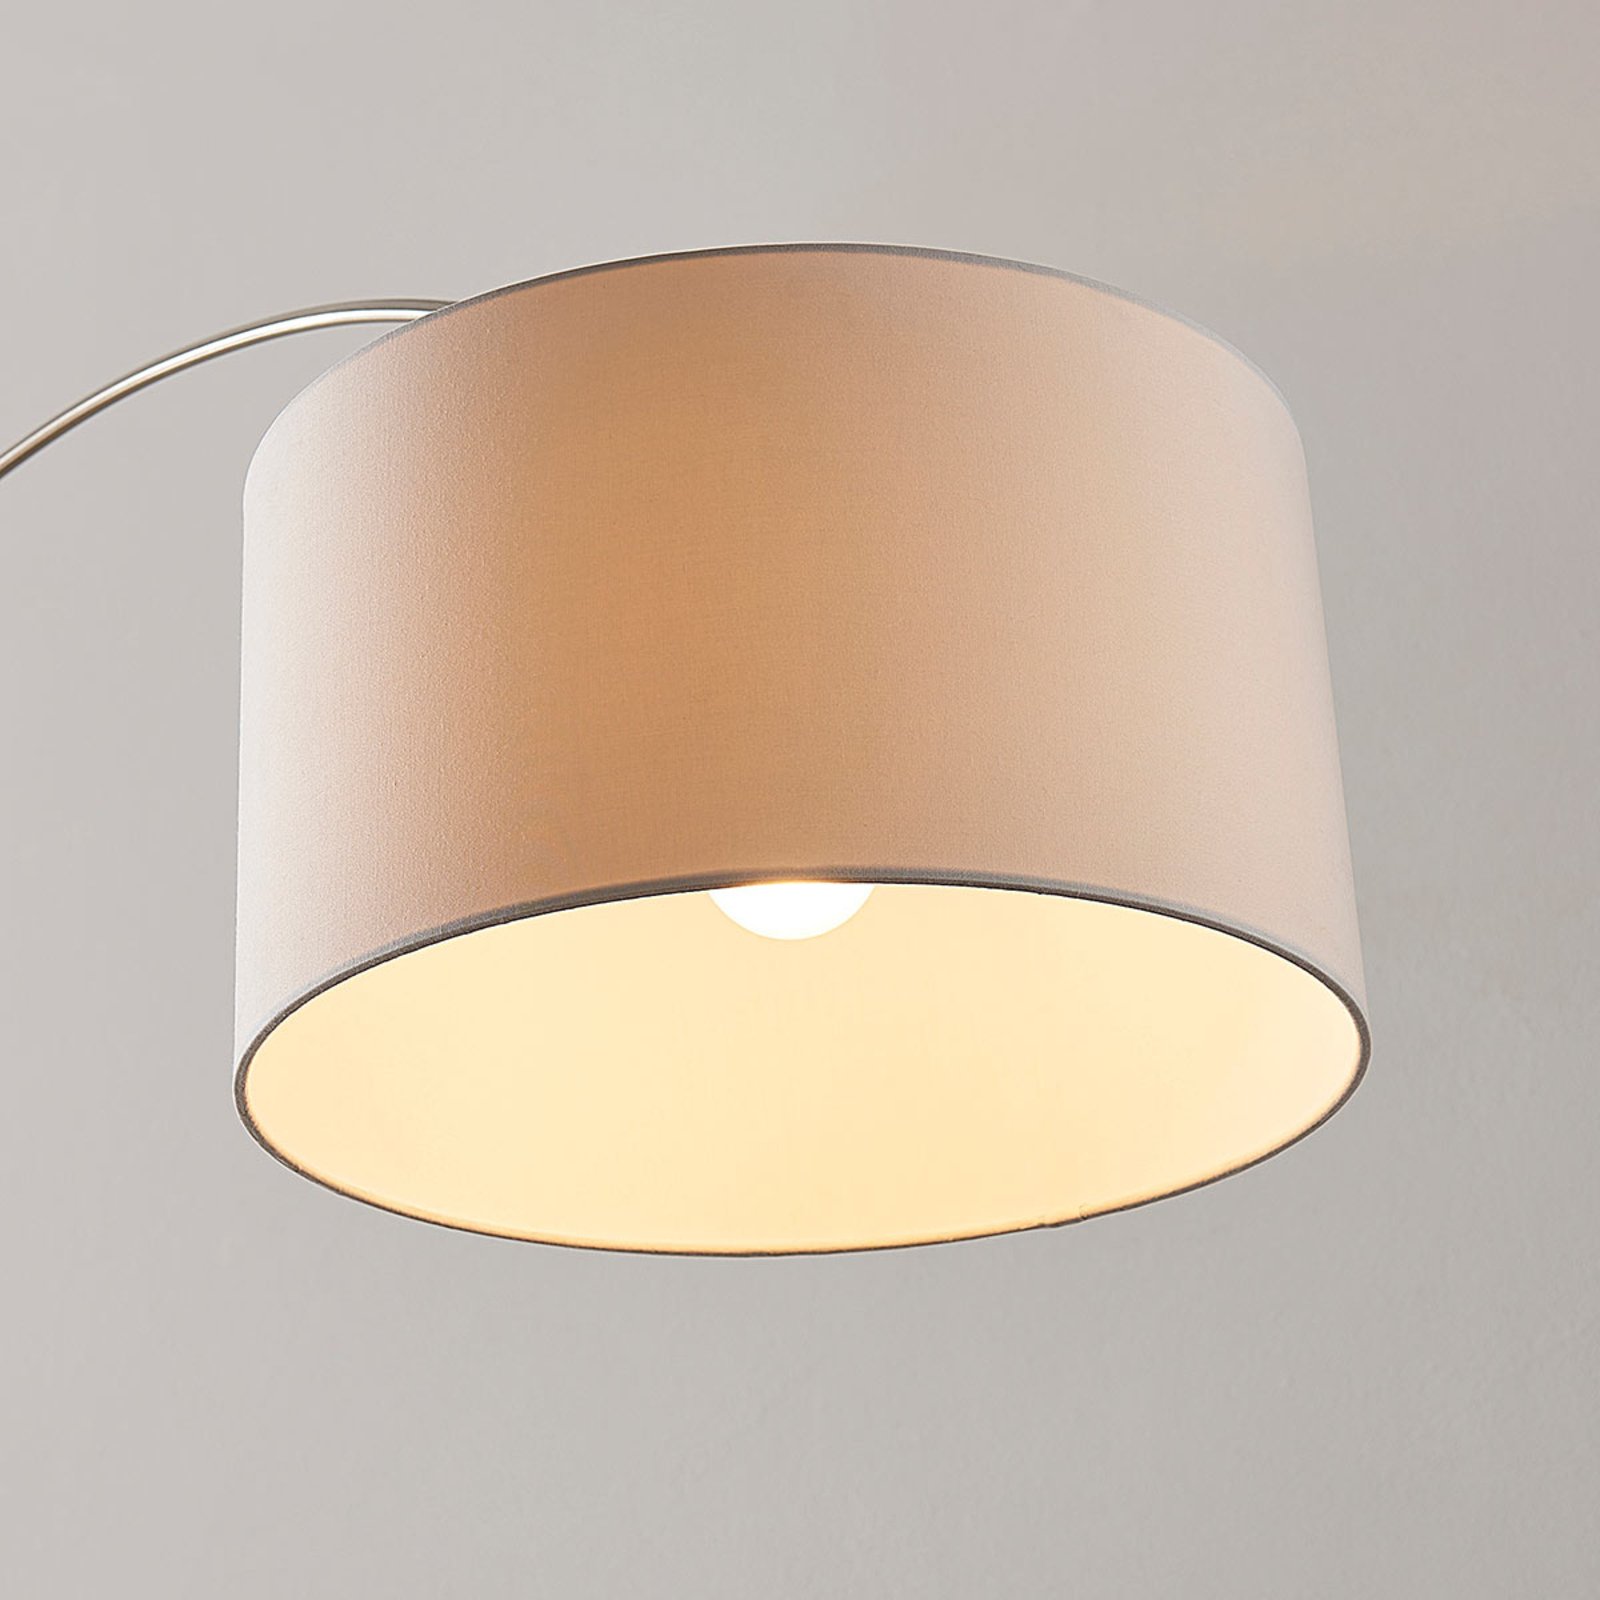 Railyn arc floor lamp, white fabric lampshade